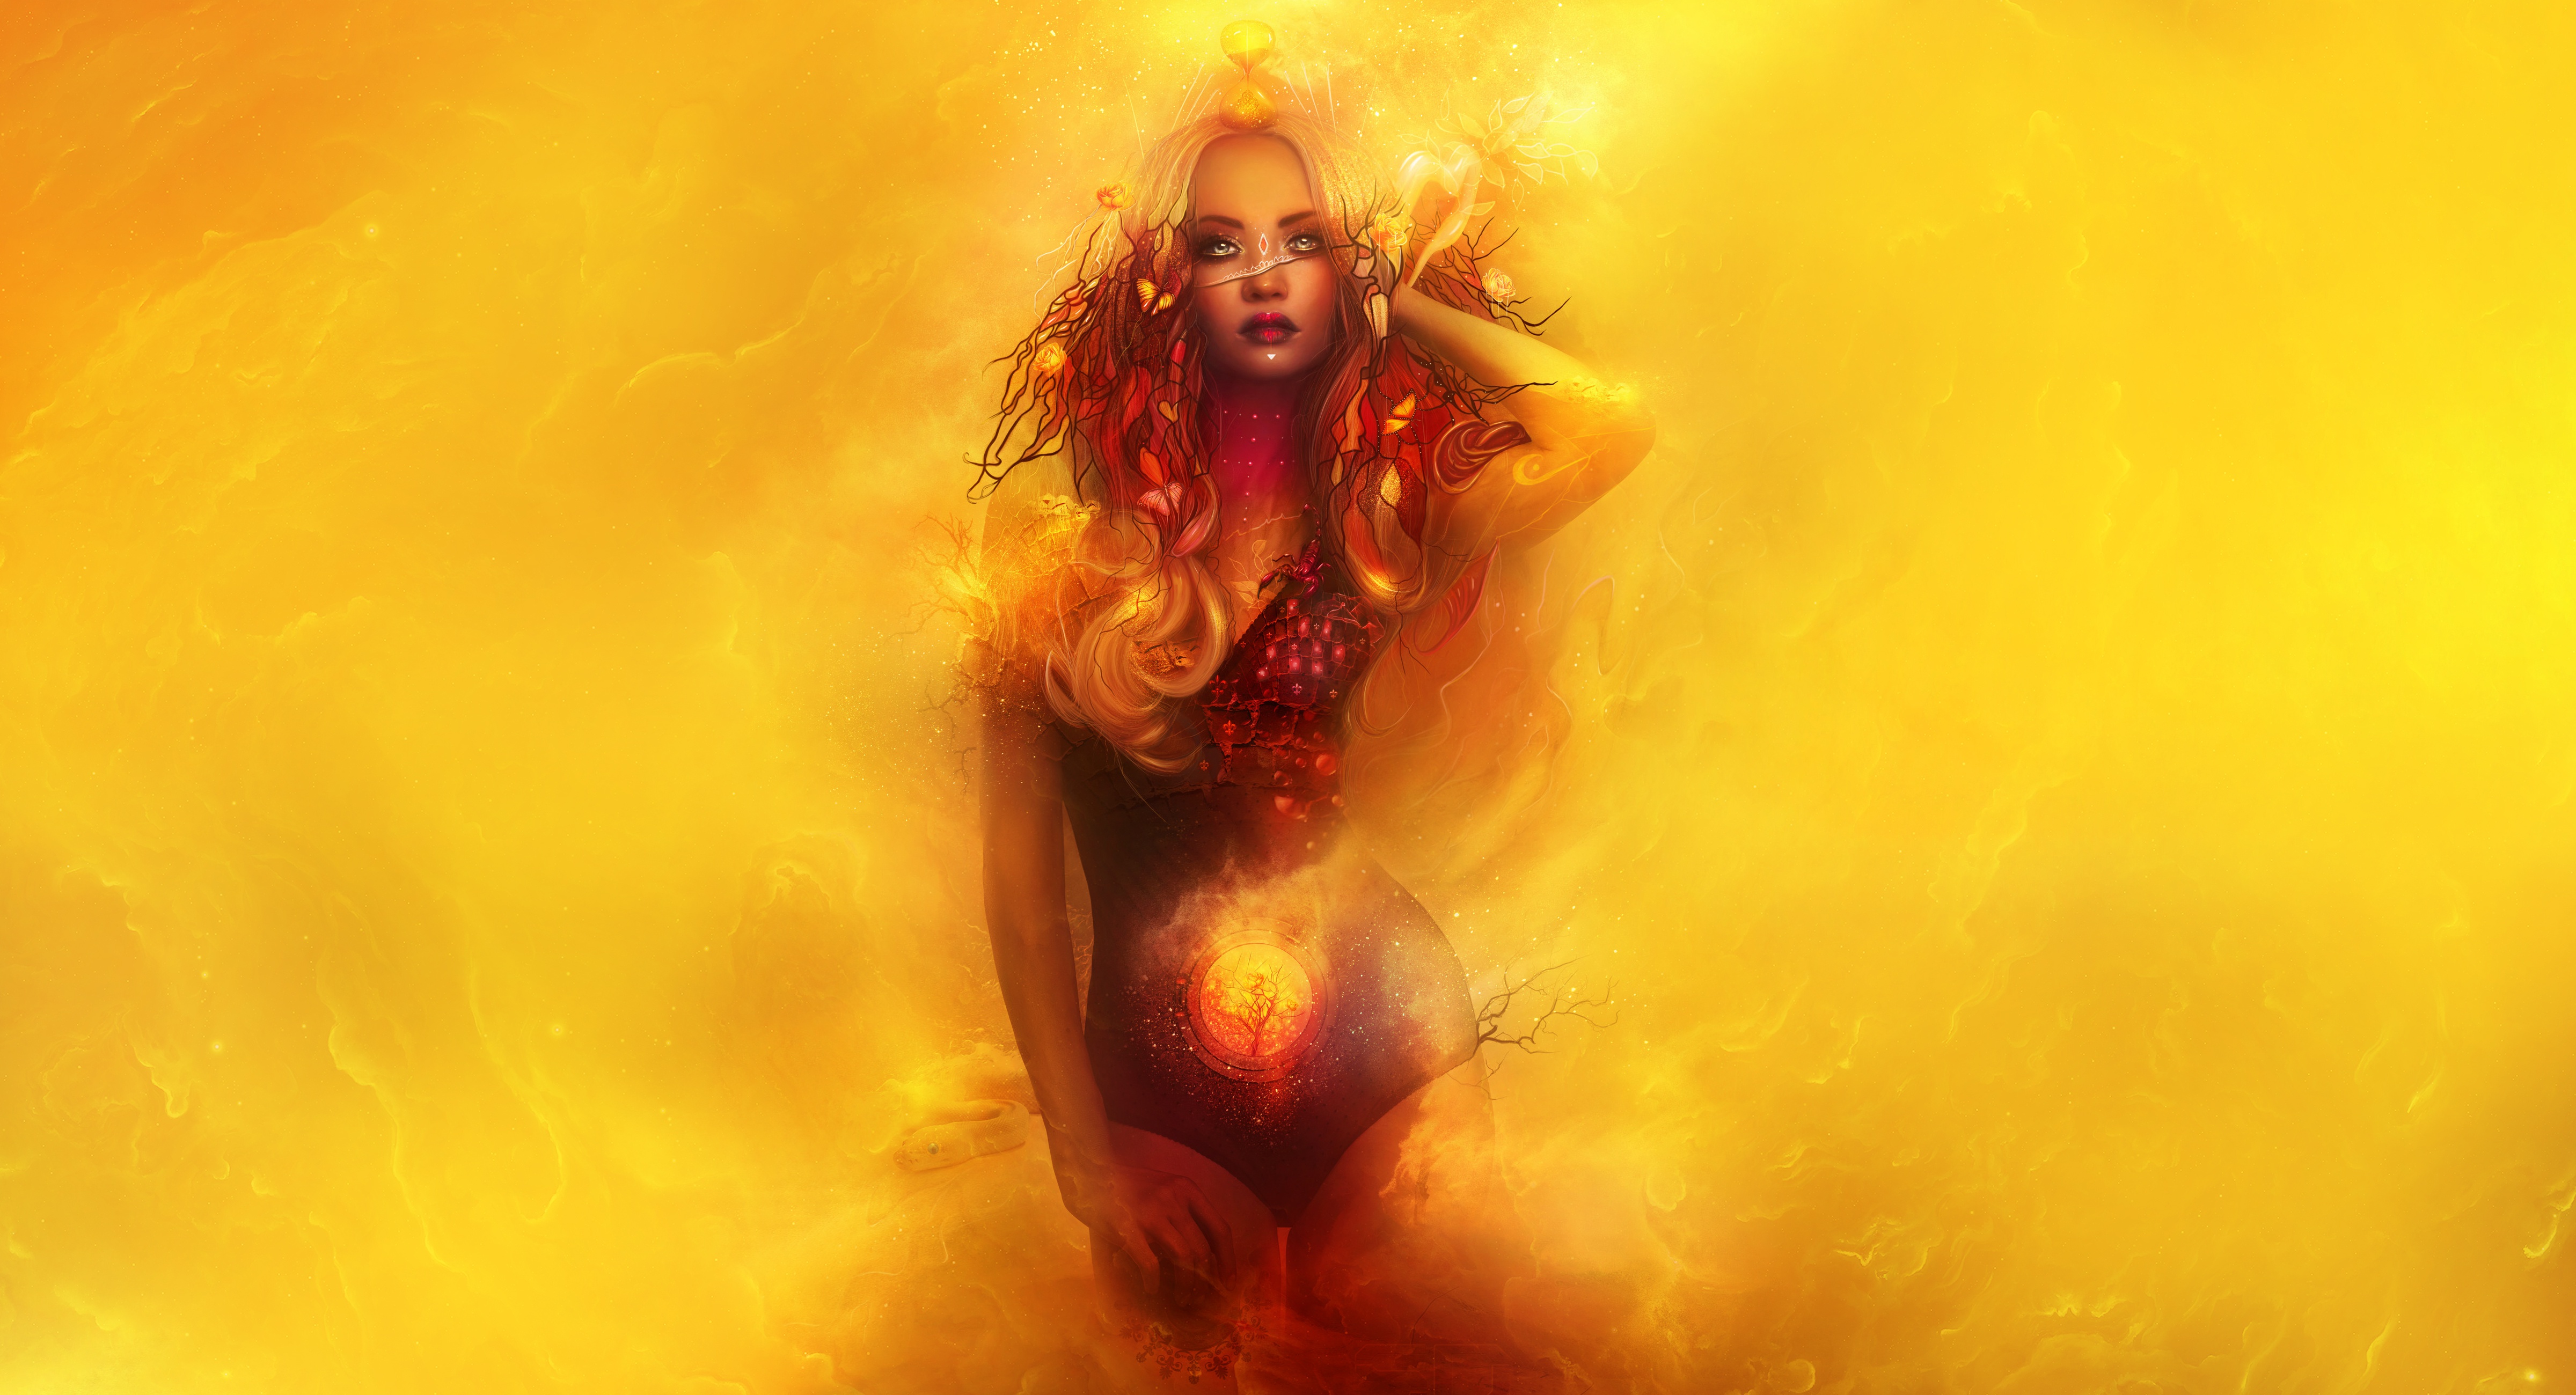 Wallpaper, yellow background, artwork, fantasy girl, fantasy art 4800x2600